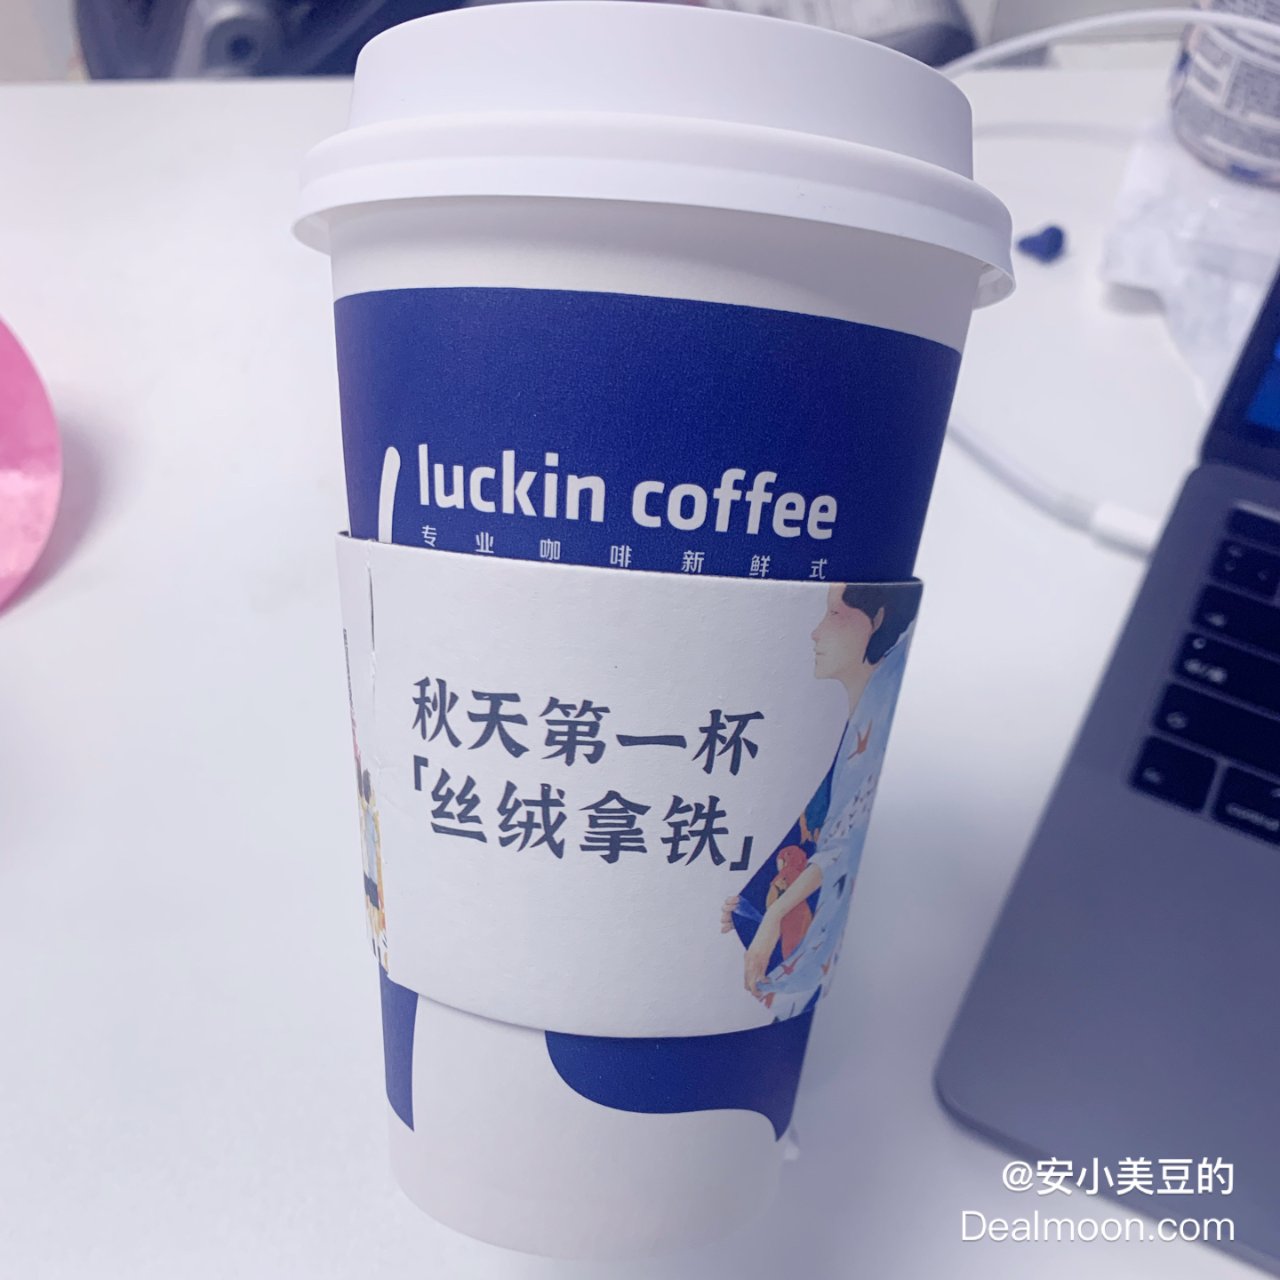 Luckin coffee 秋天第一杯“...